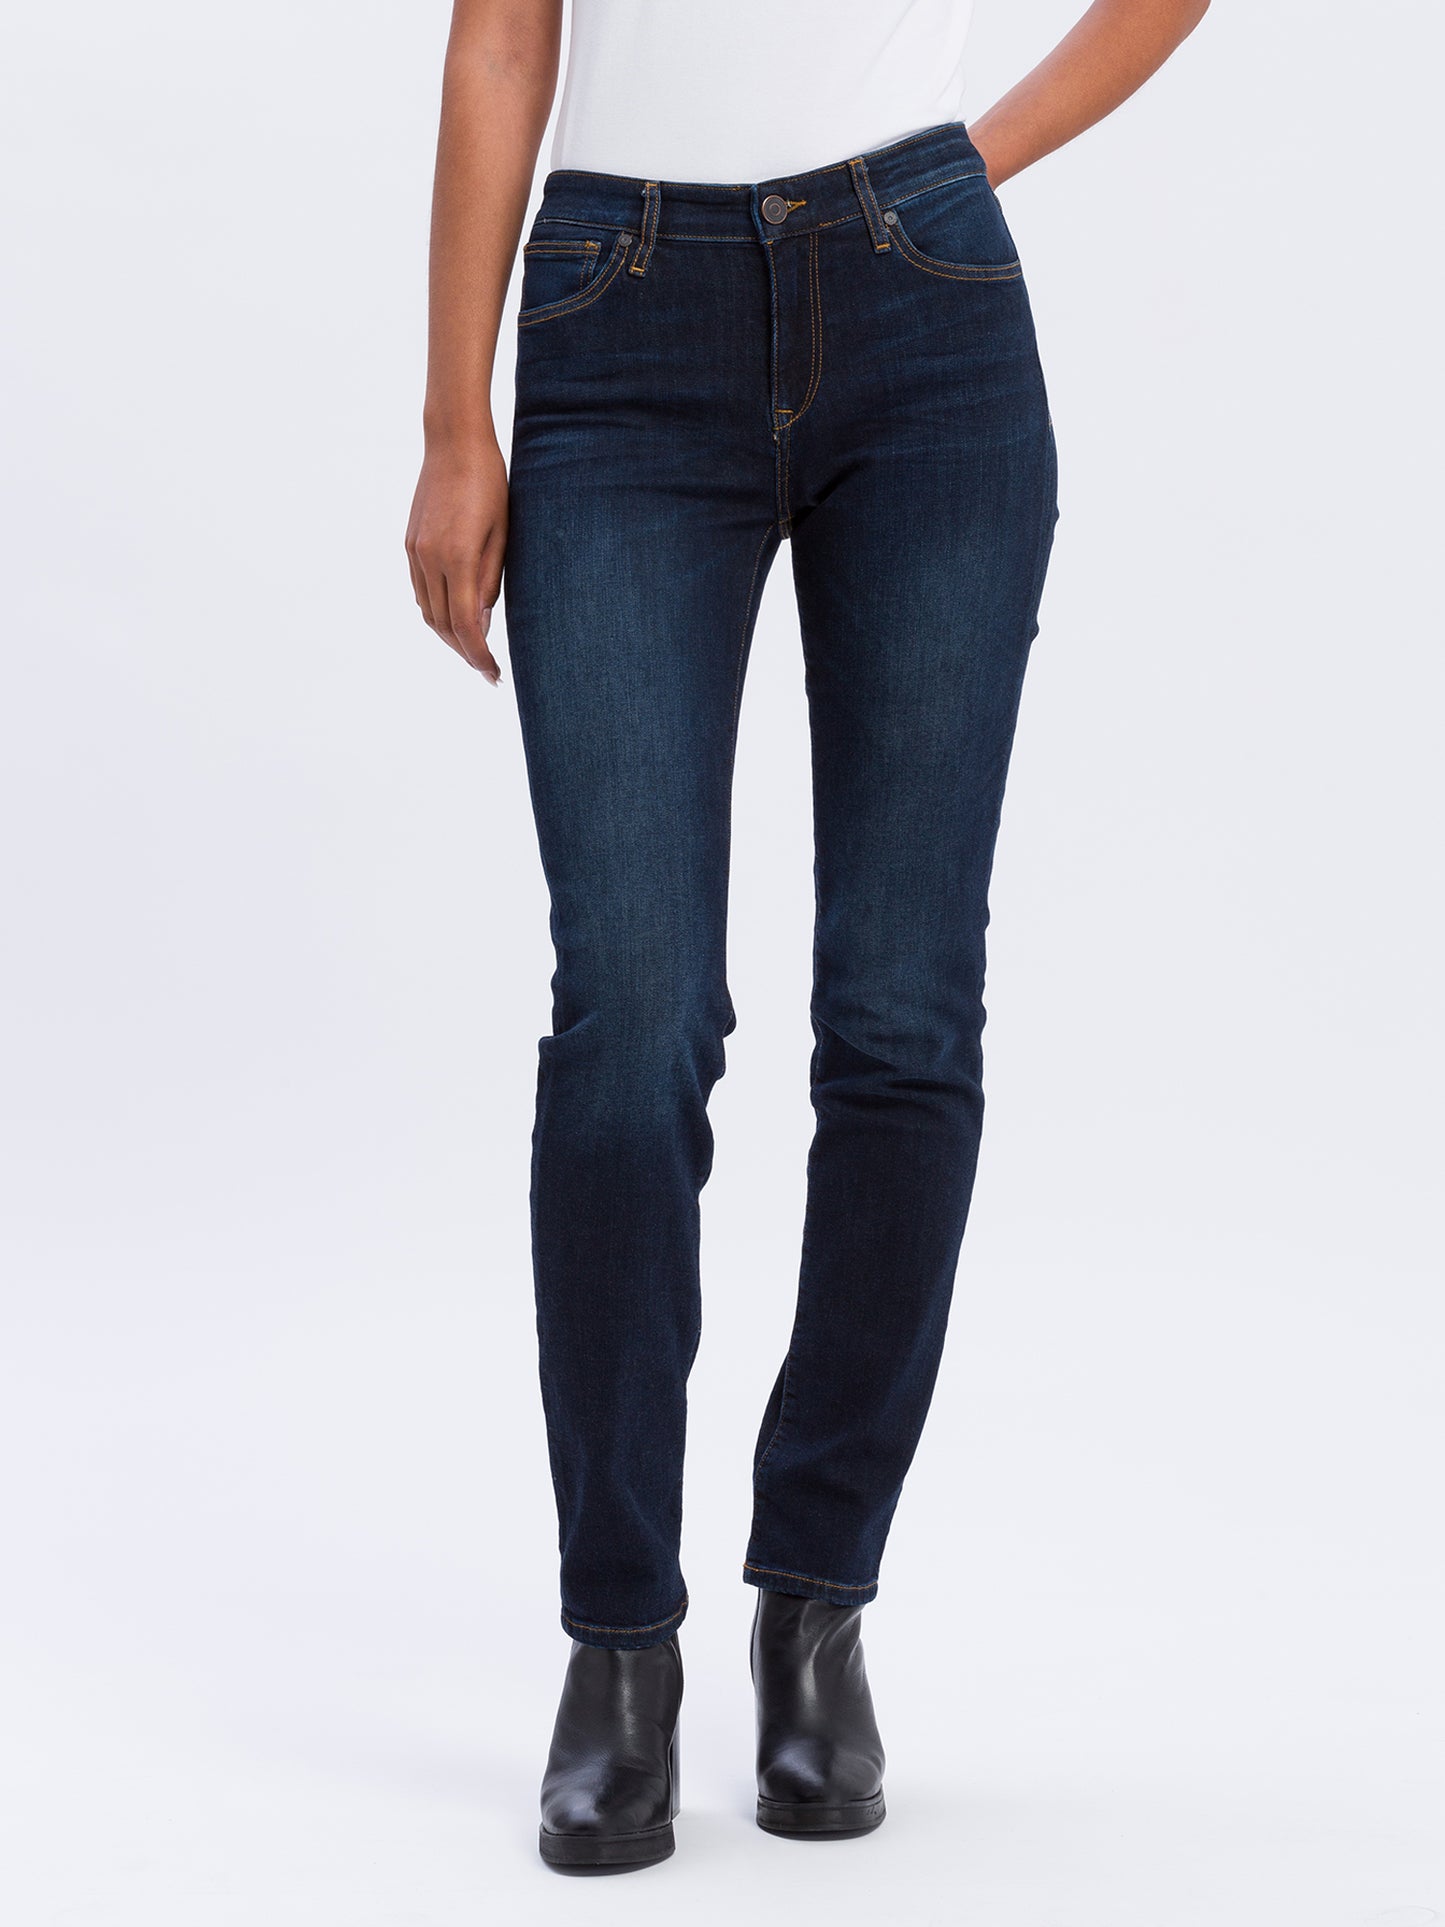 Anya women's jeans slim fit high waist dark blue